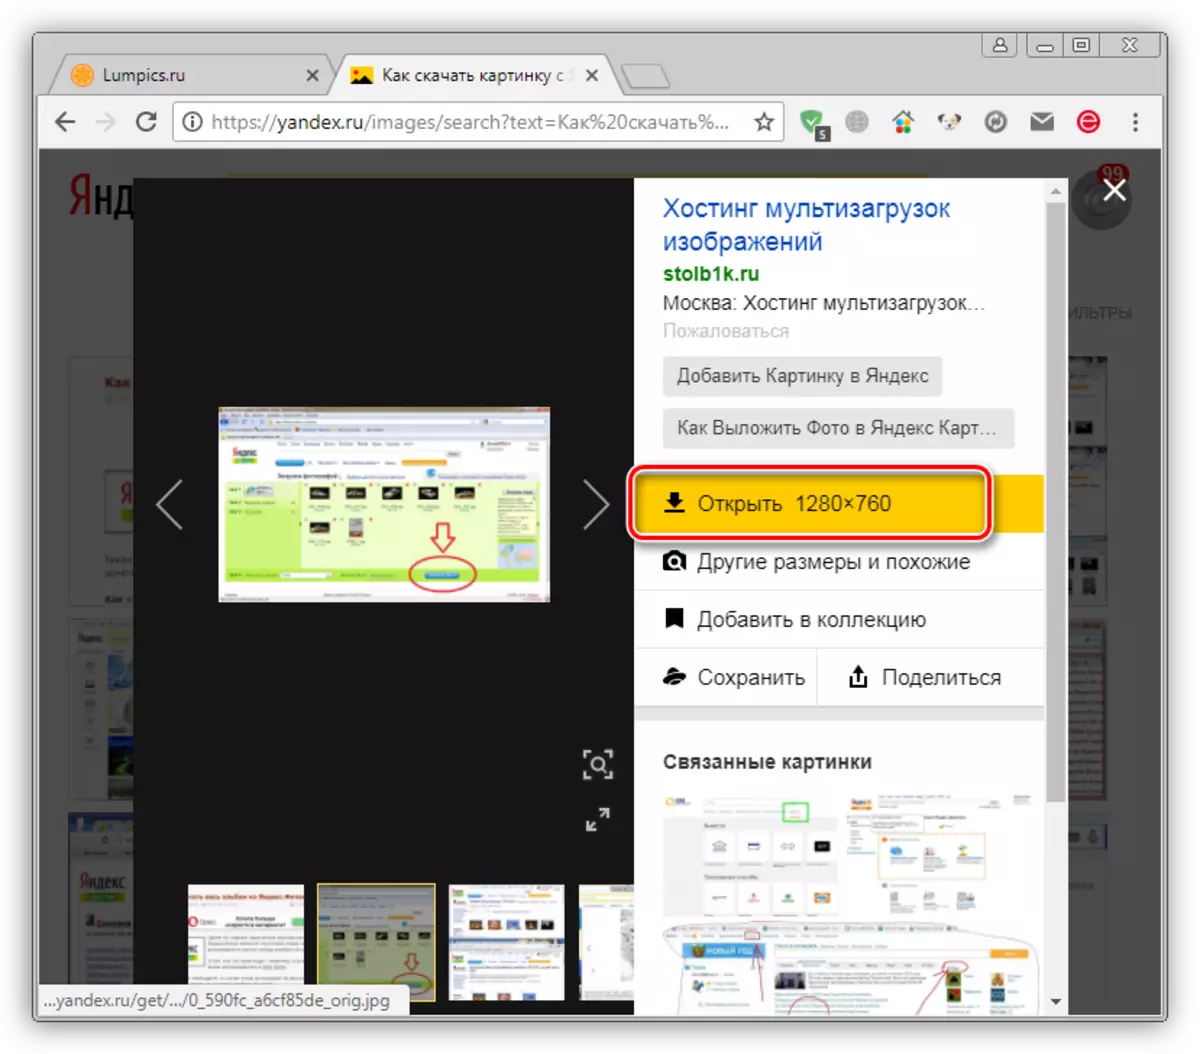 Google Chrome లో Yandex యొక్క శోధన ఫలితాల్లో డౌన్లోడ్ కోసం ఒక చిత్రాన్ని తెరవడం